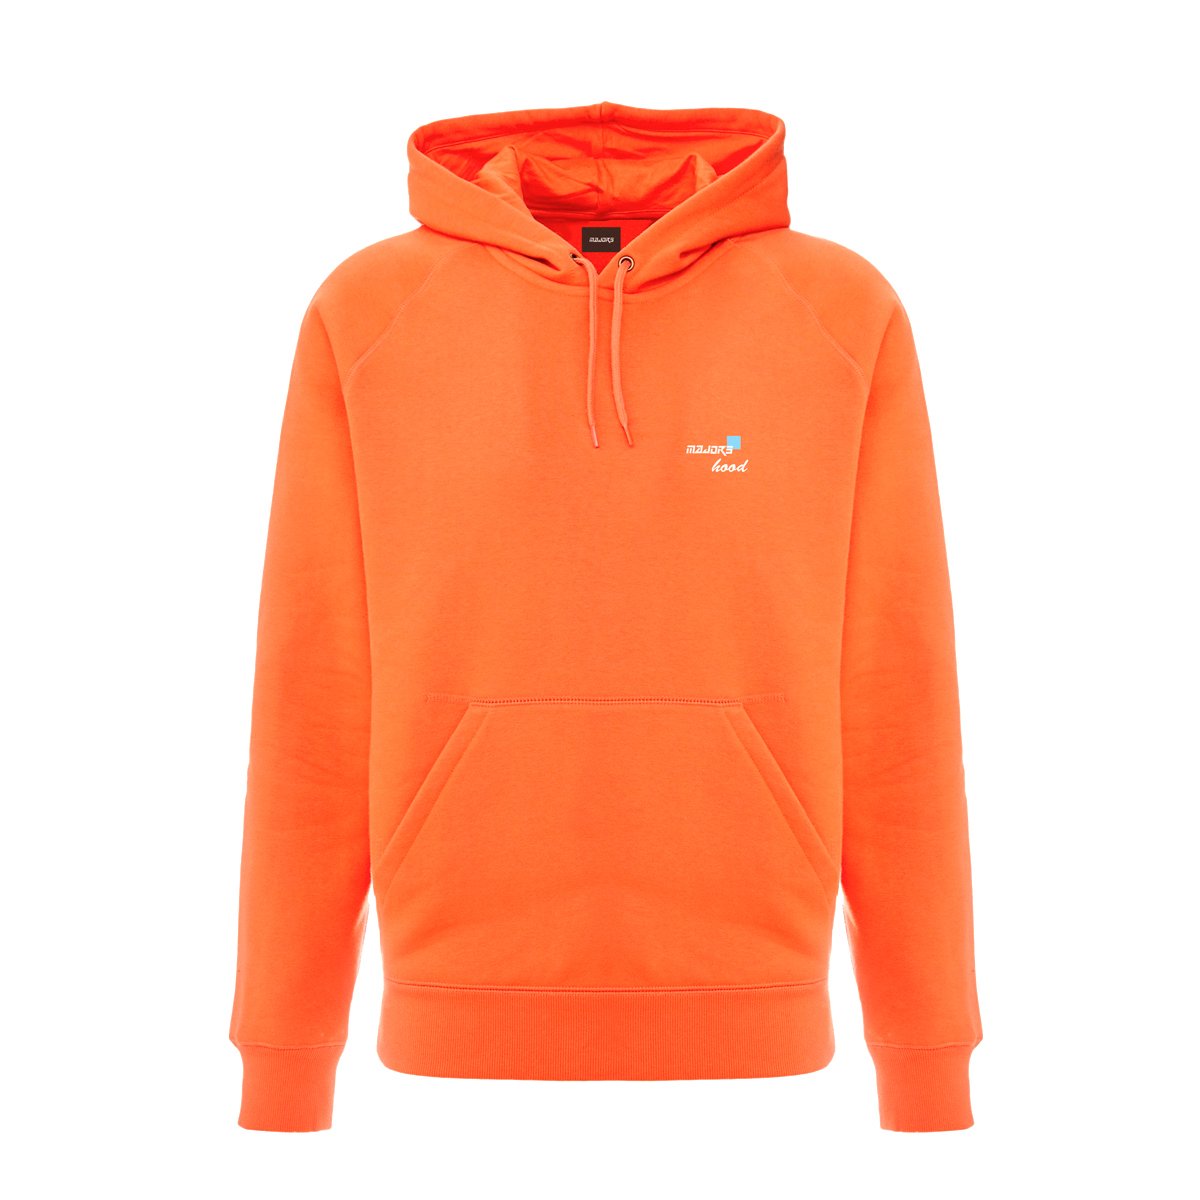 Sweatshirt Majors Orange Hoodie orange | Bludshop.com